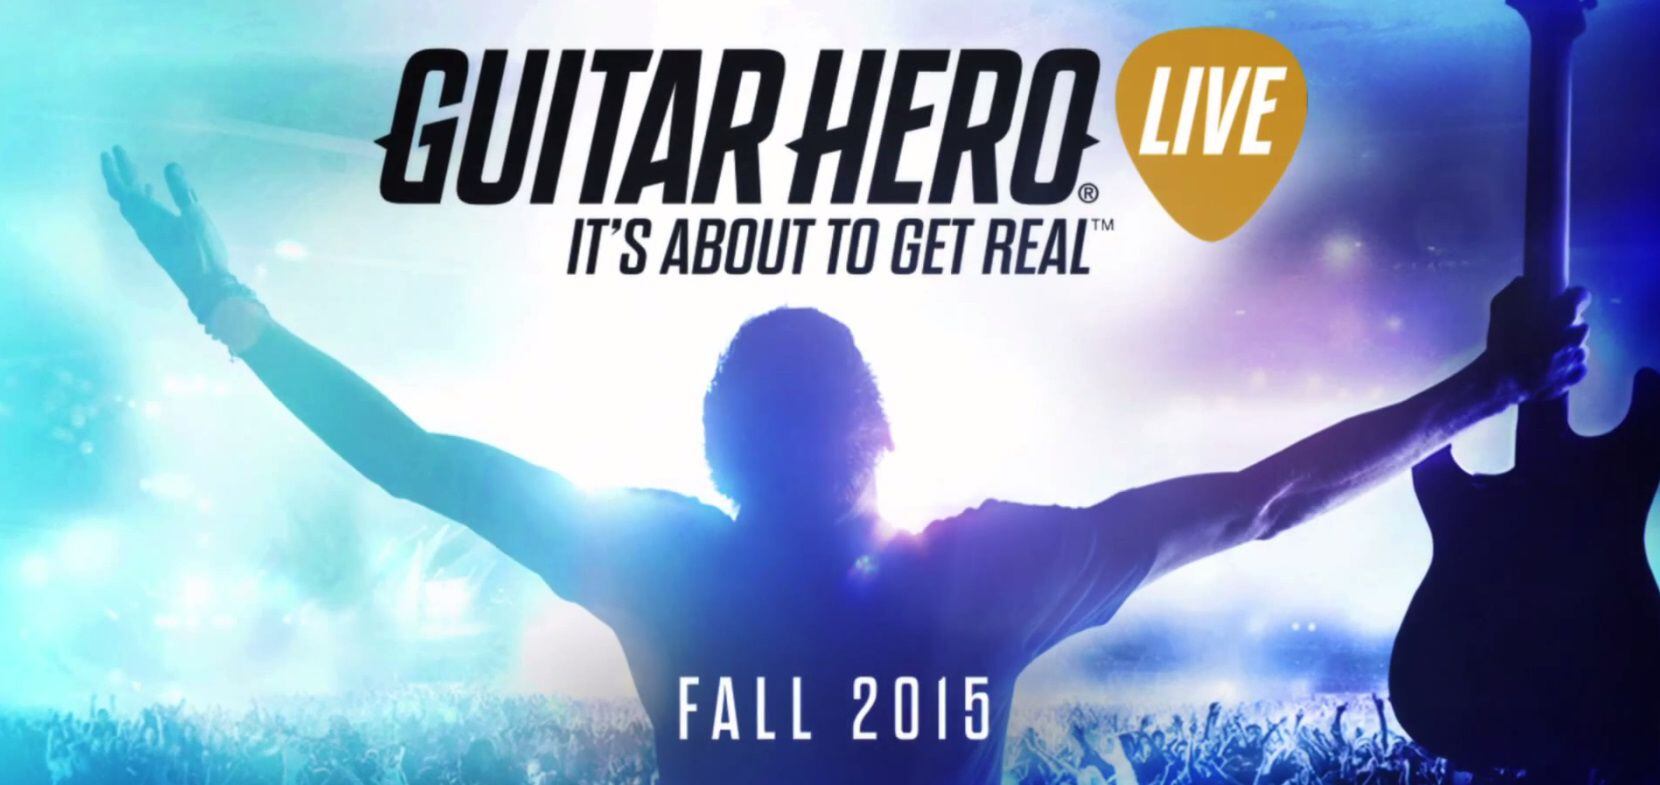 How long is Guitar Hero Live?